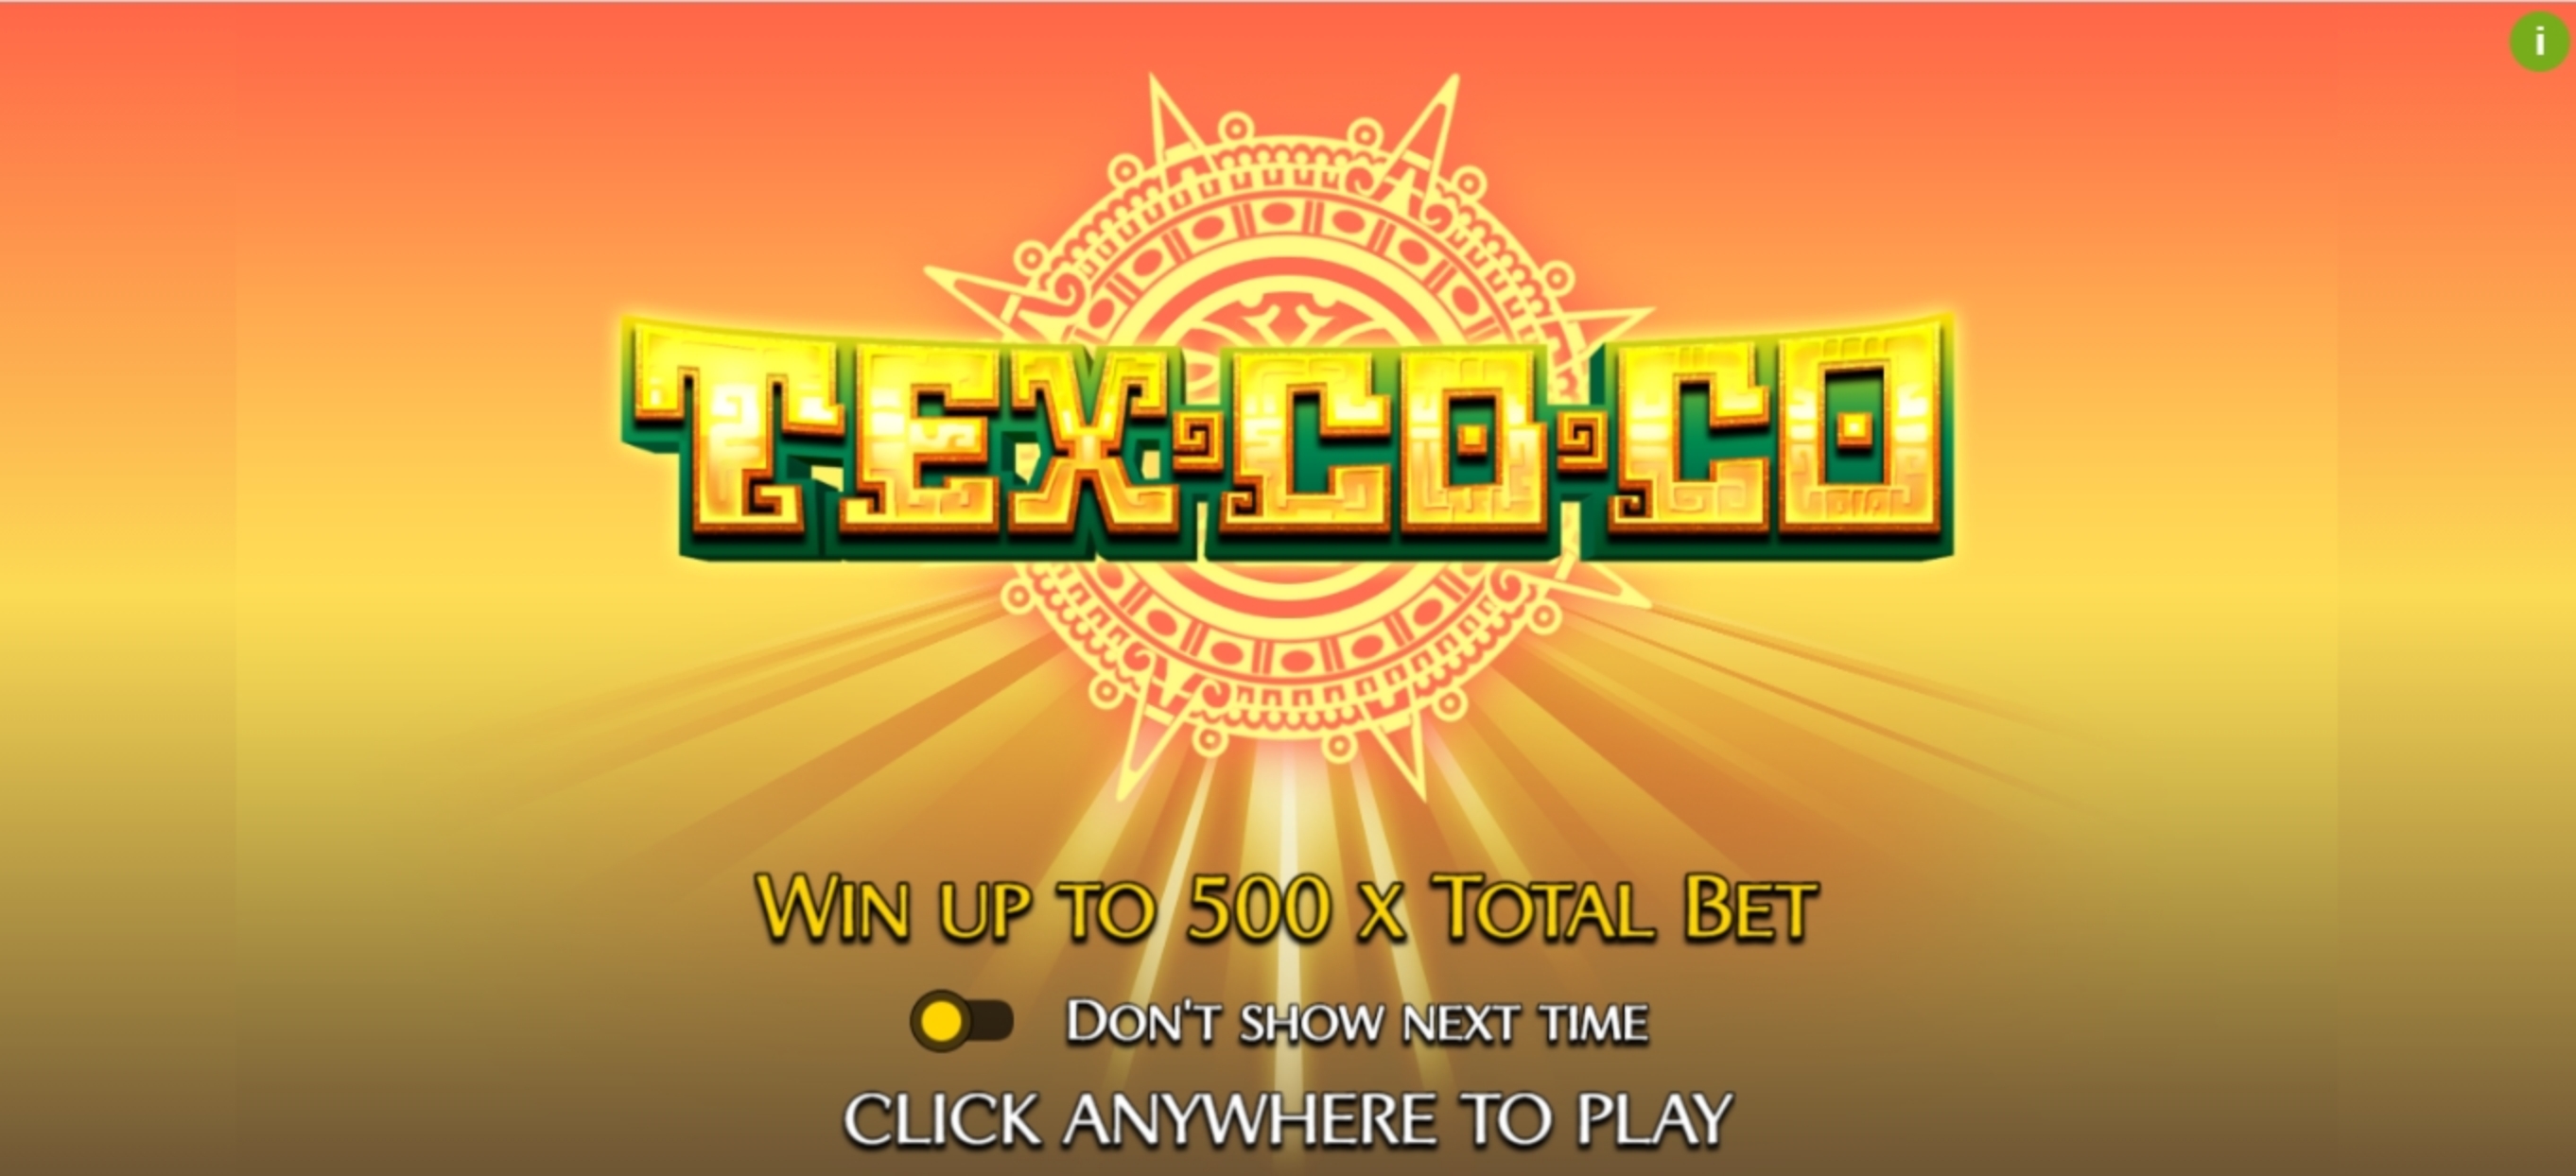 Play TexCoCo Free Casino Slot Game by FUGA Gaming